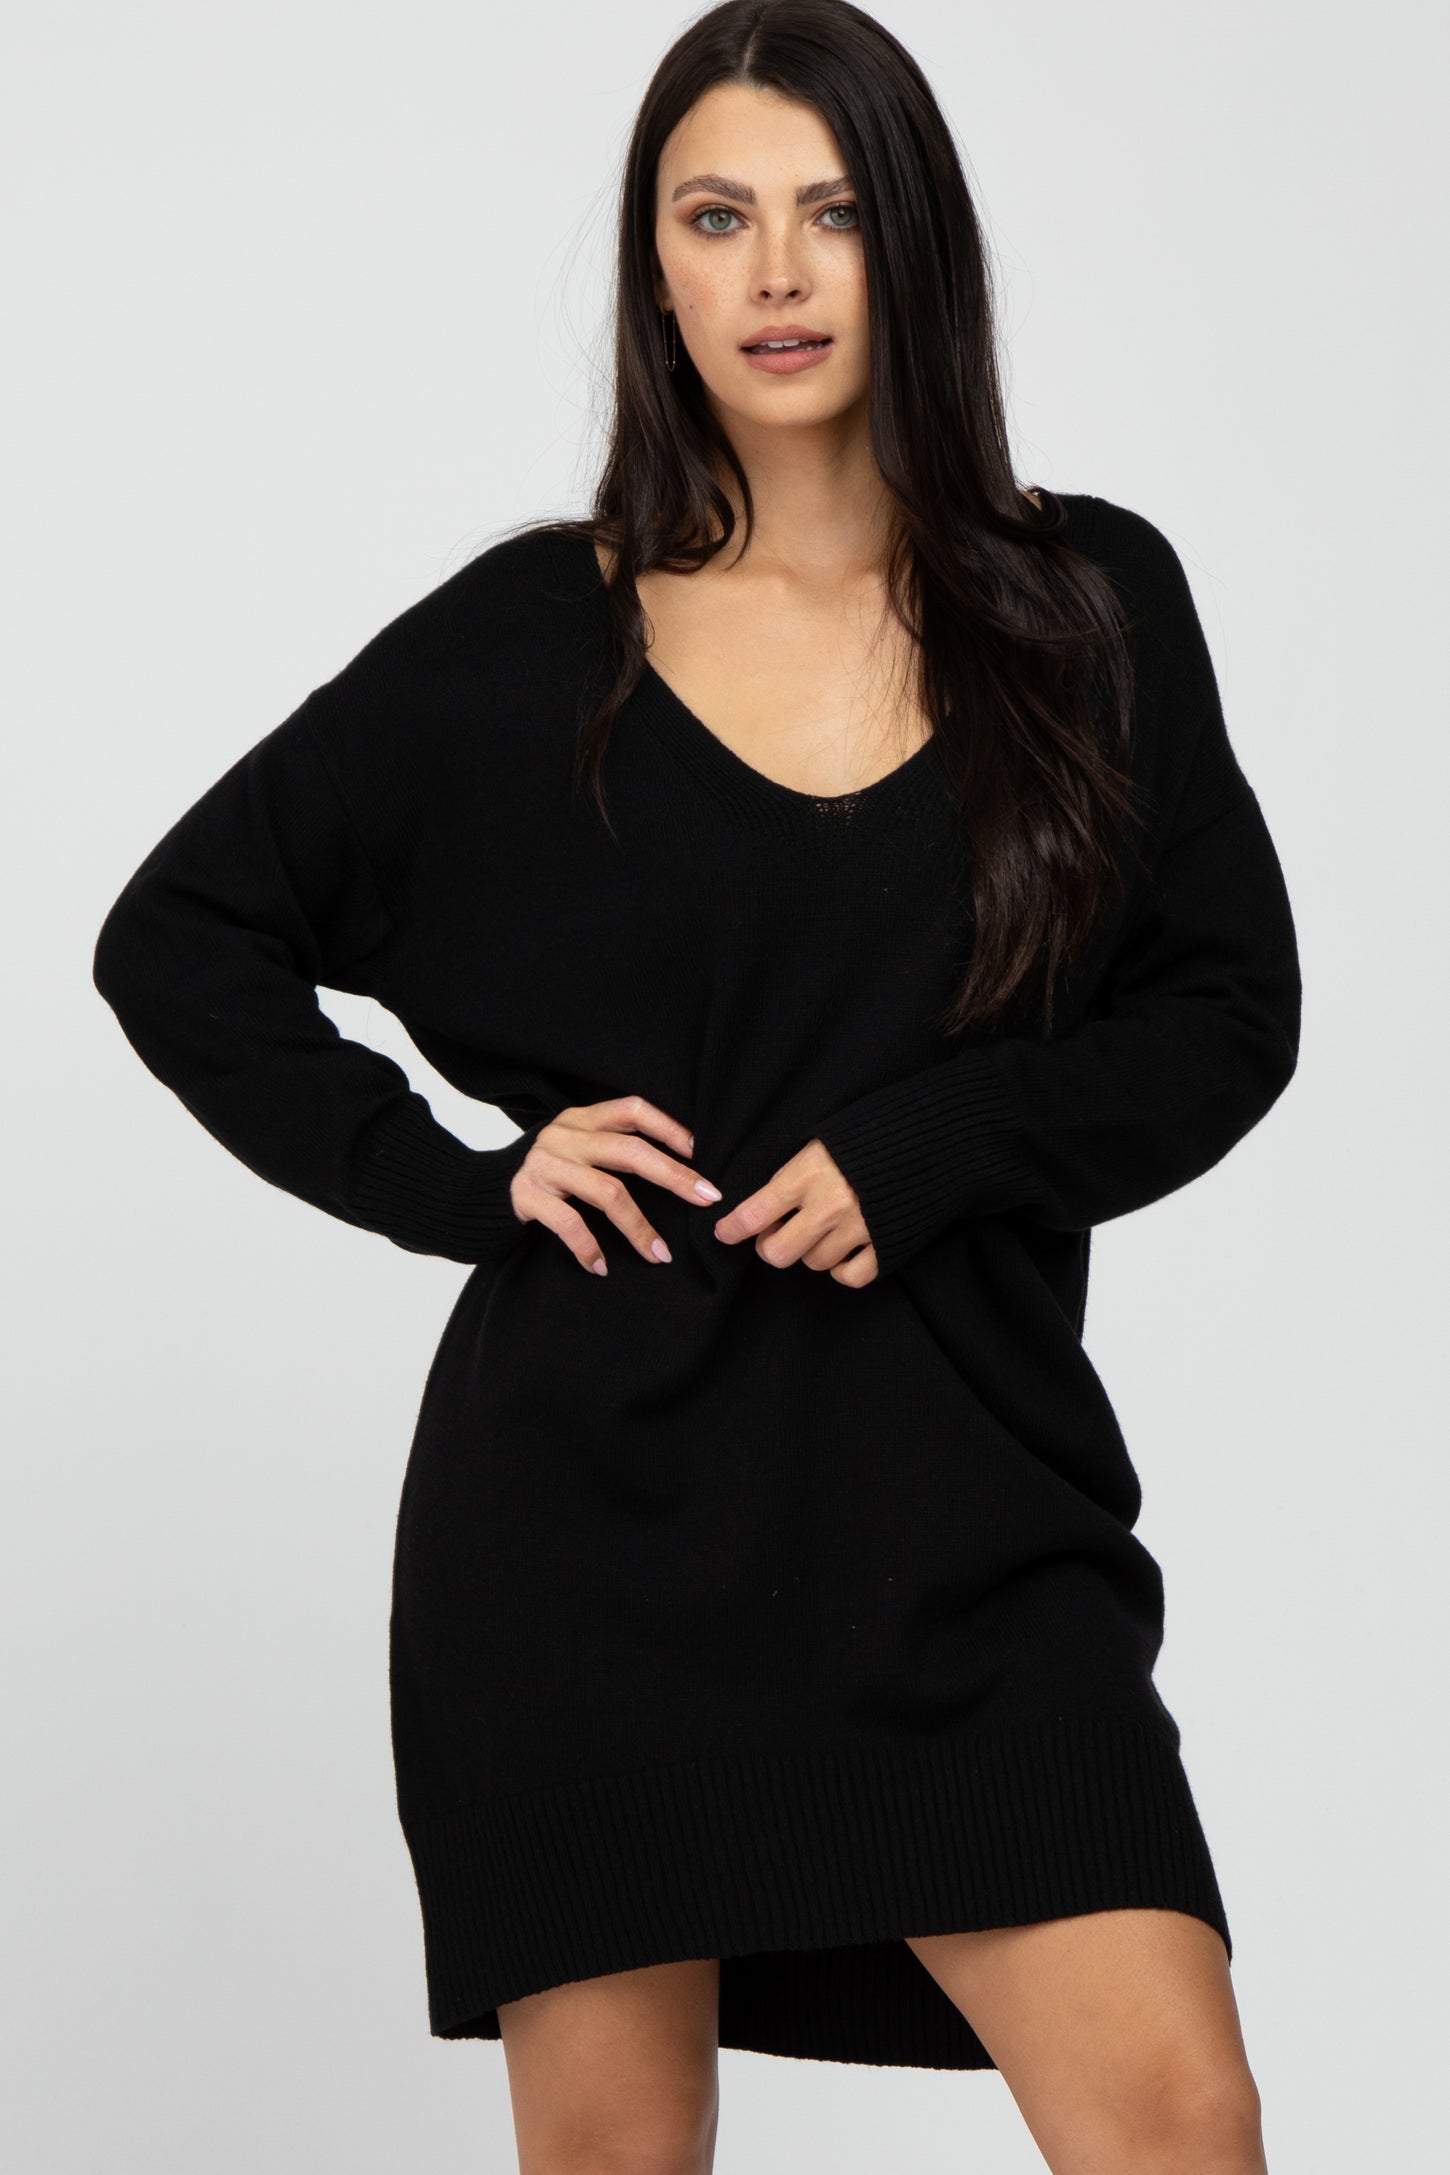 Black Knit Long Sleeve Maternity Sweater Dress